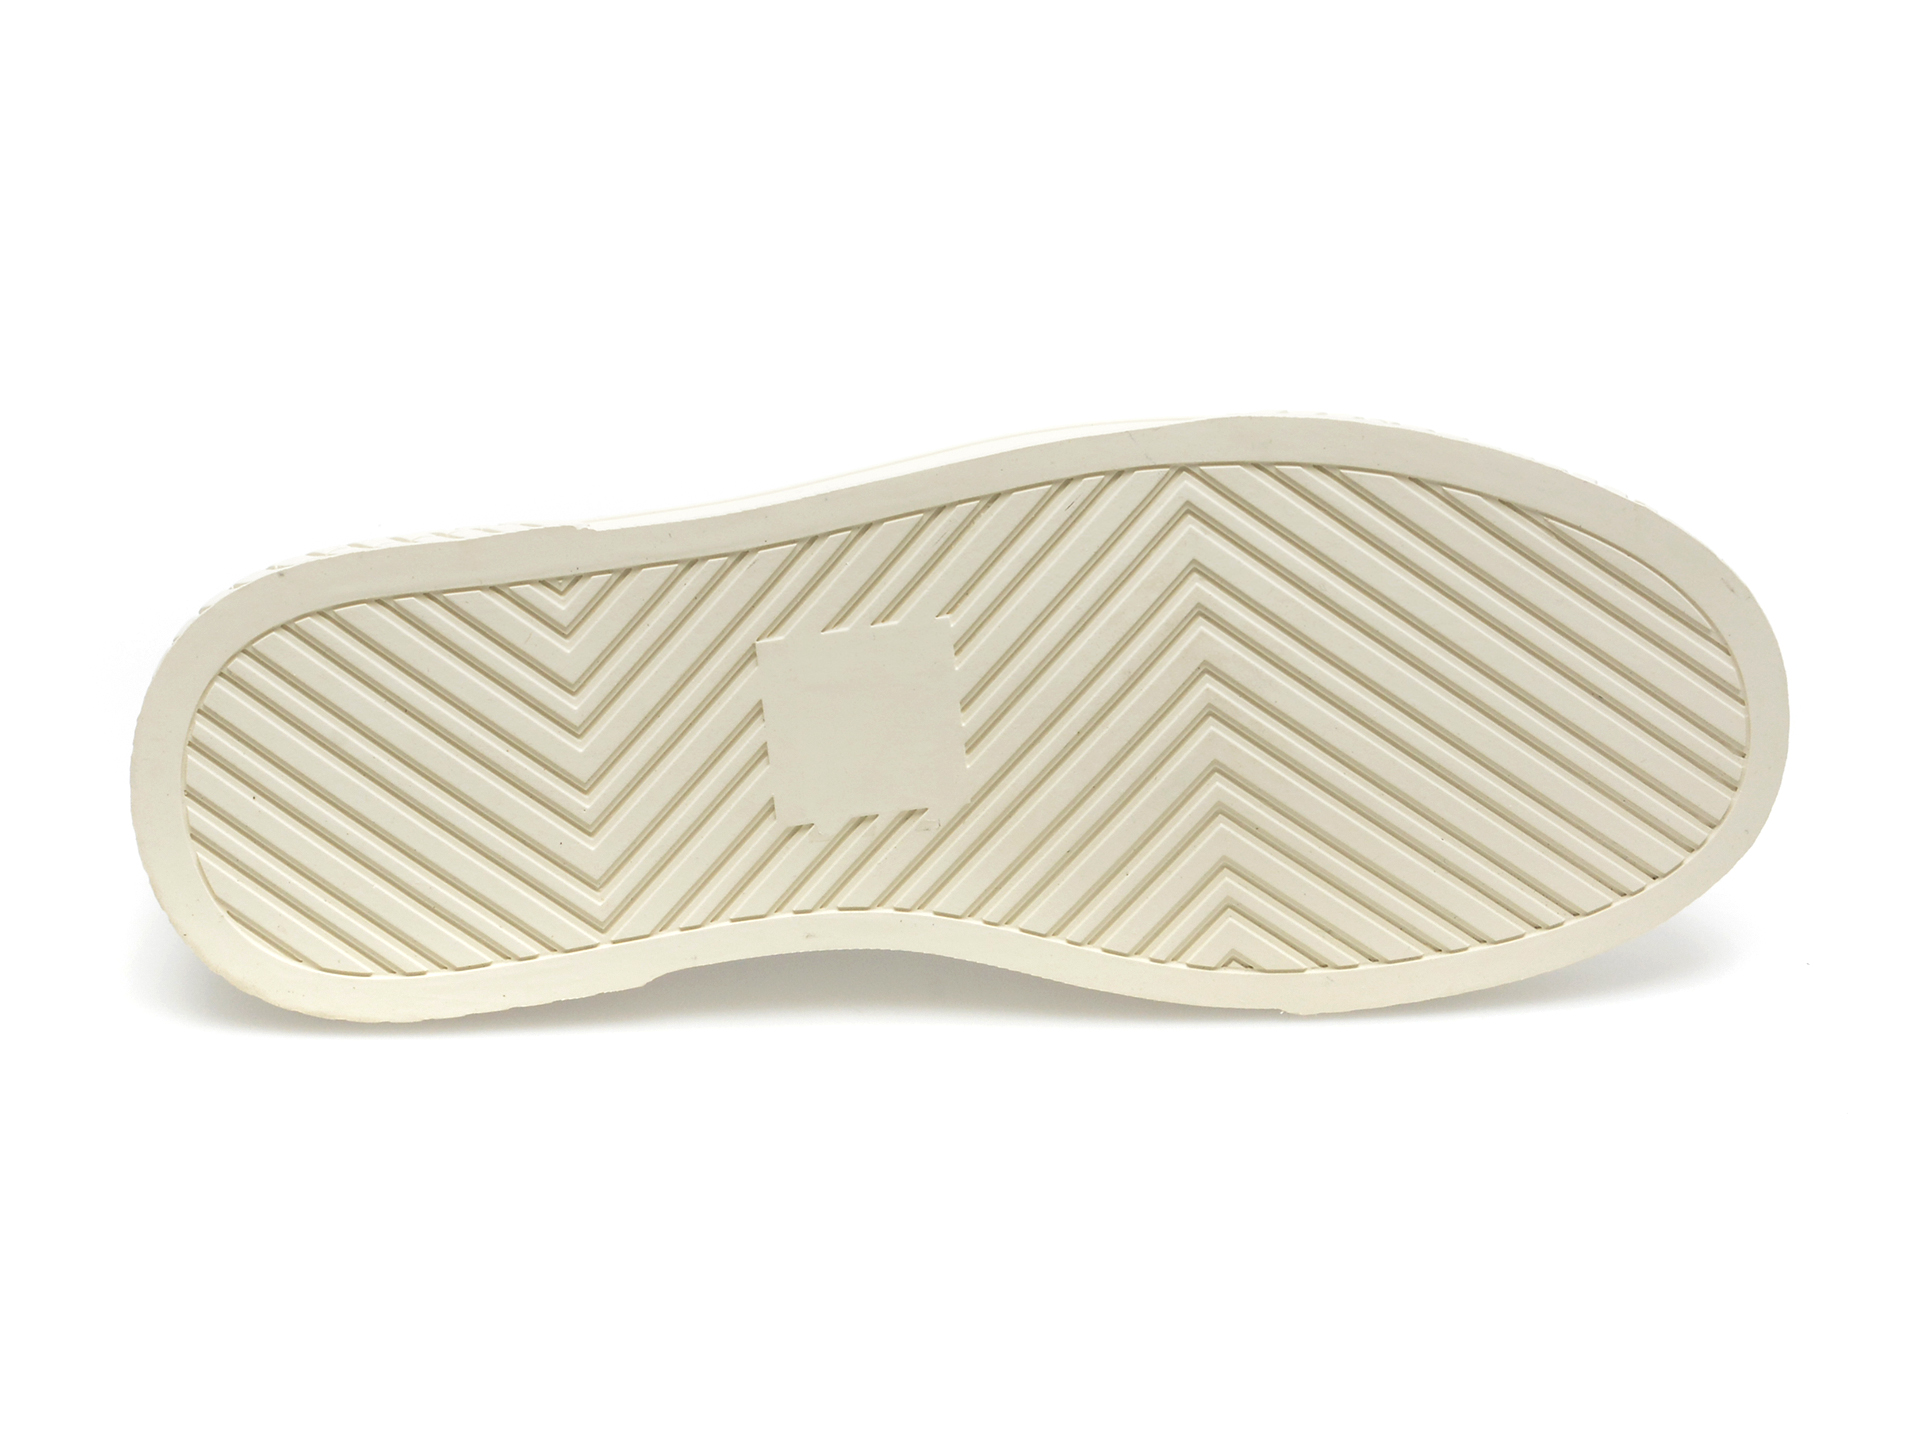 Pantofi sport OTTER albi, F035, din piele naturala